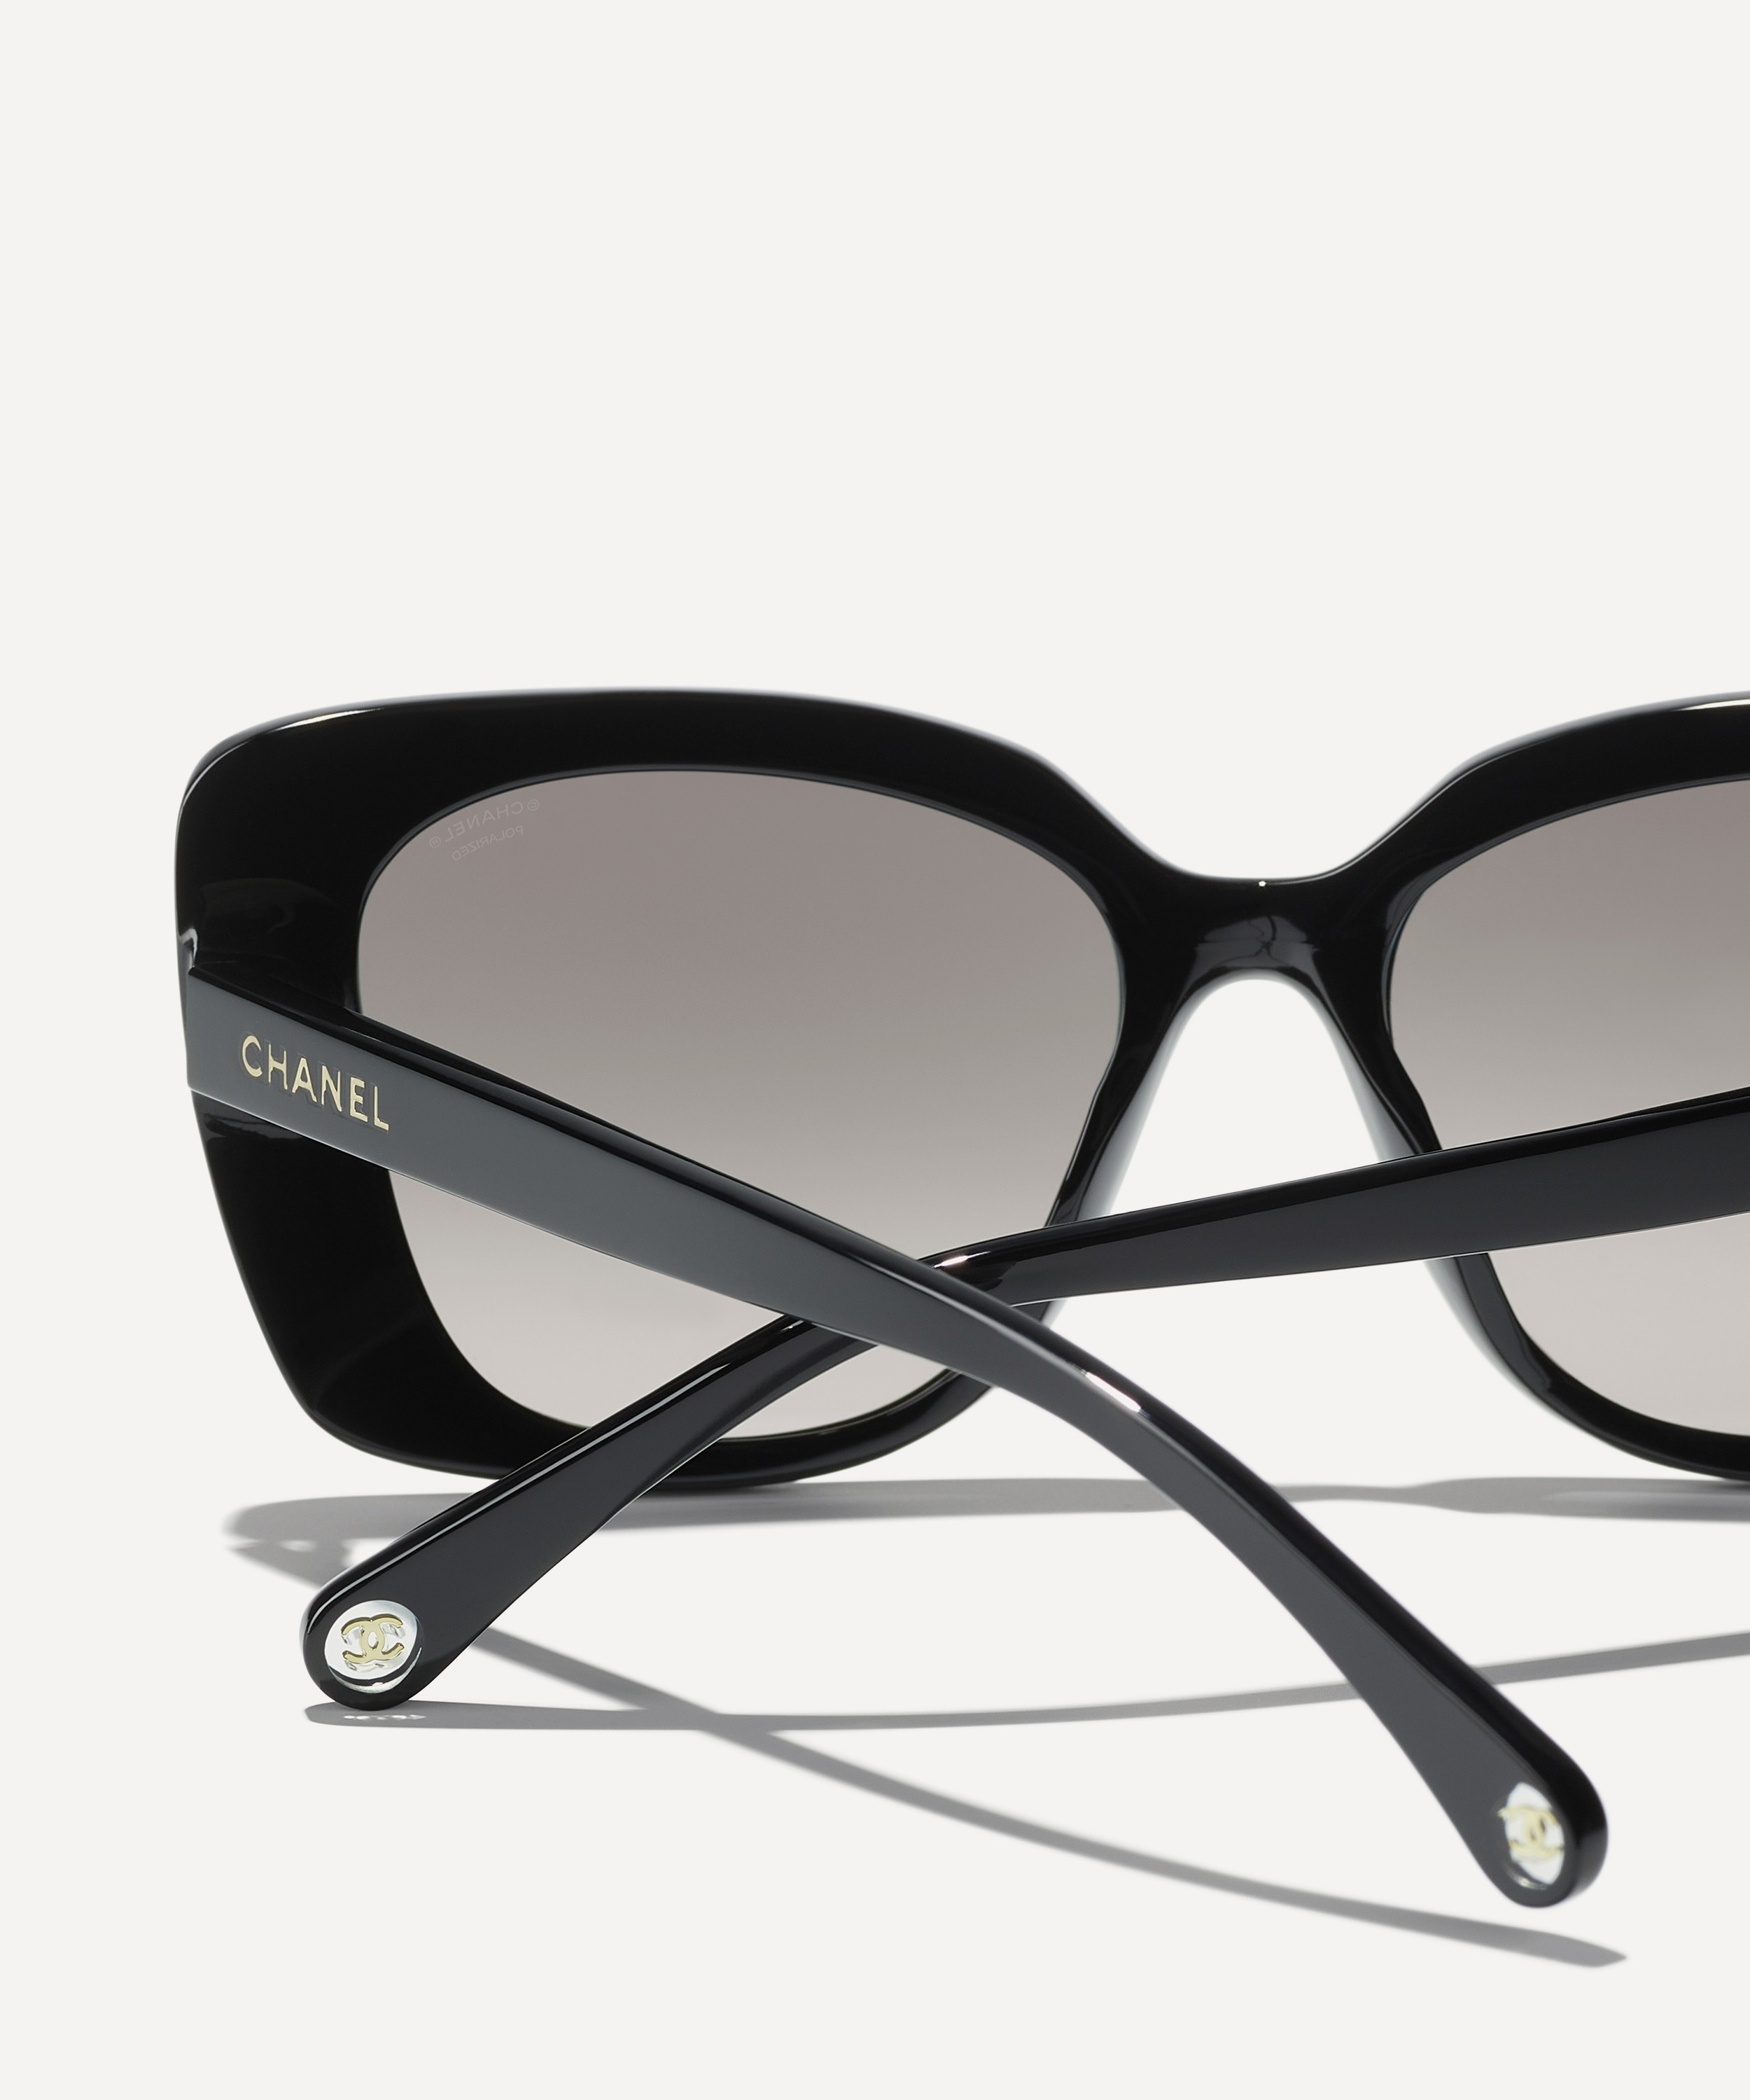 CHANEL Women's Square Sunglasses 5422B Polarized Black/White 5422-B-A  c.1026/S4